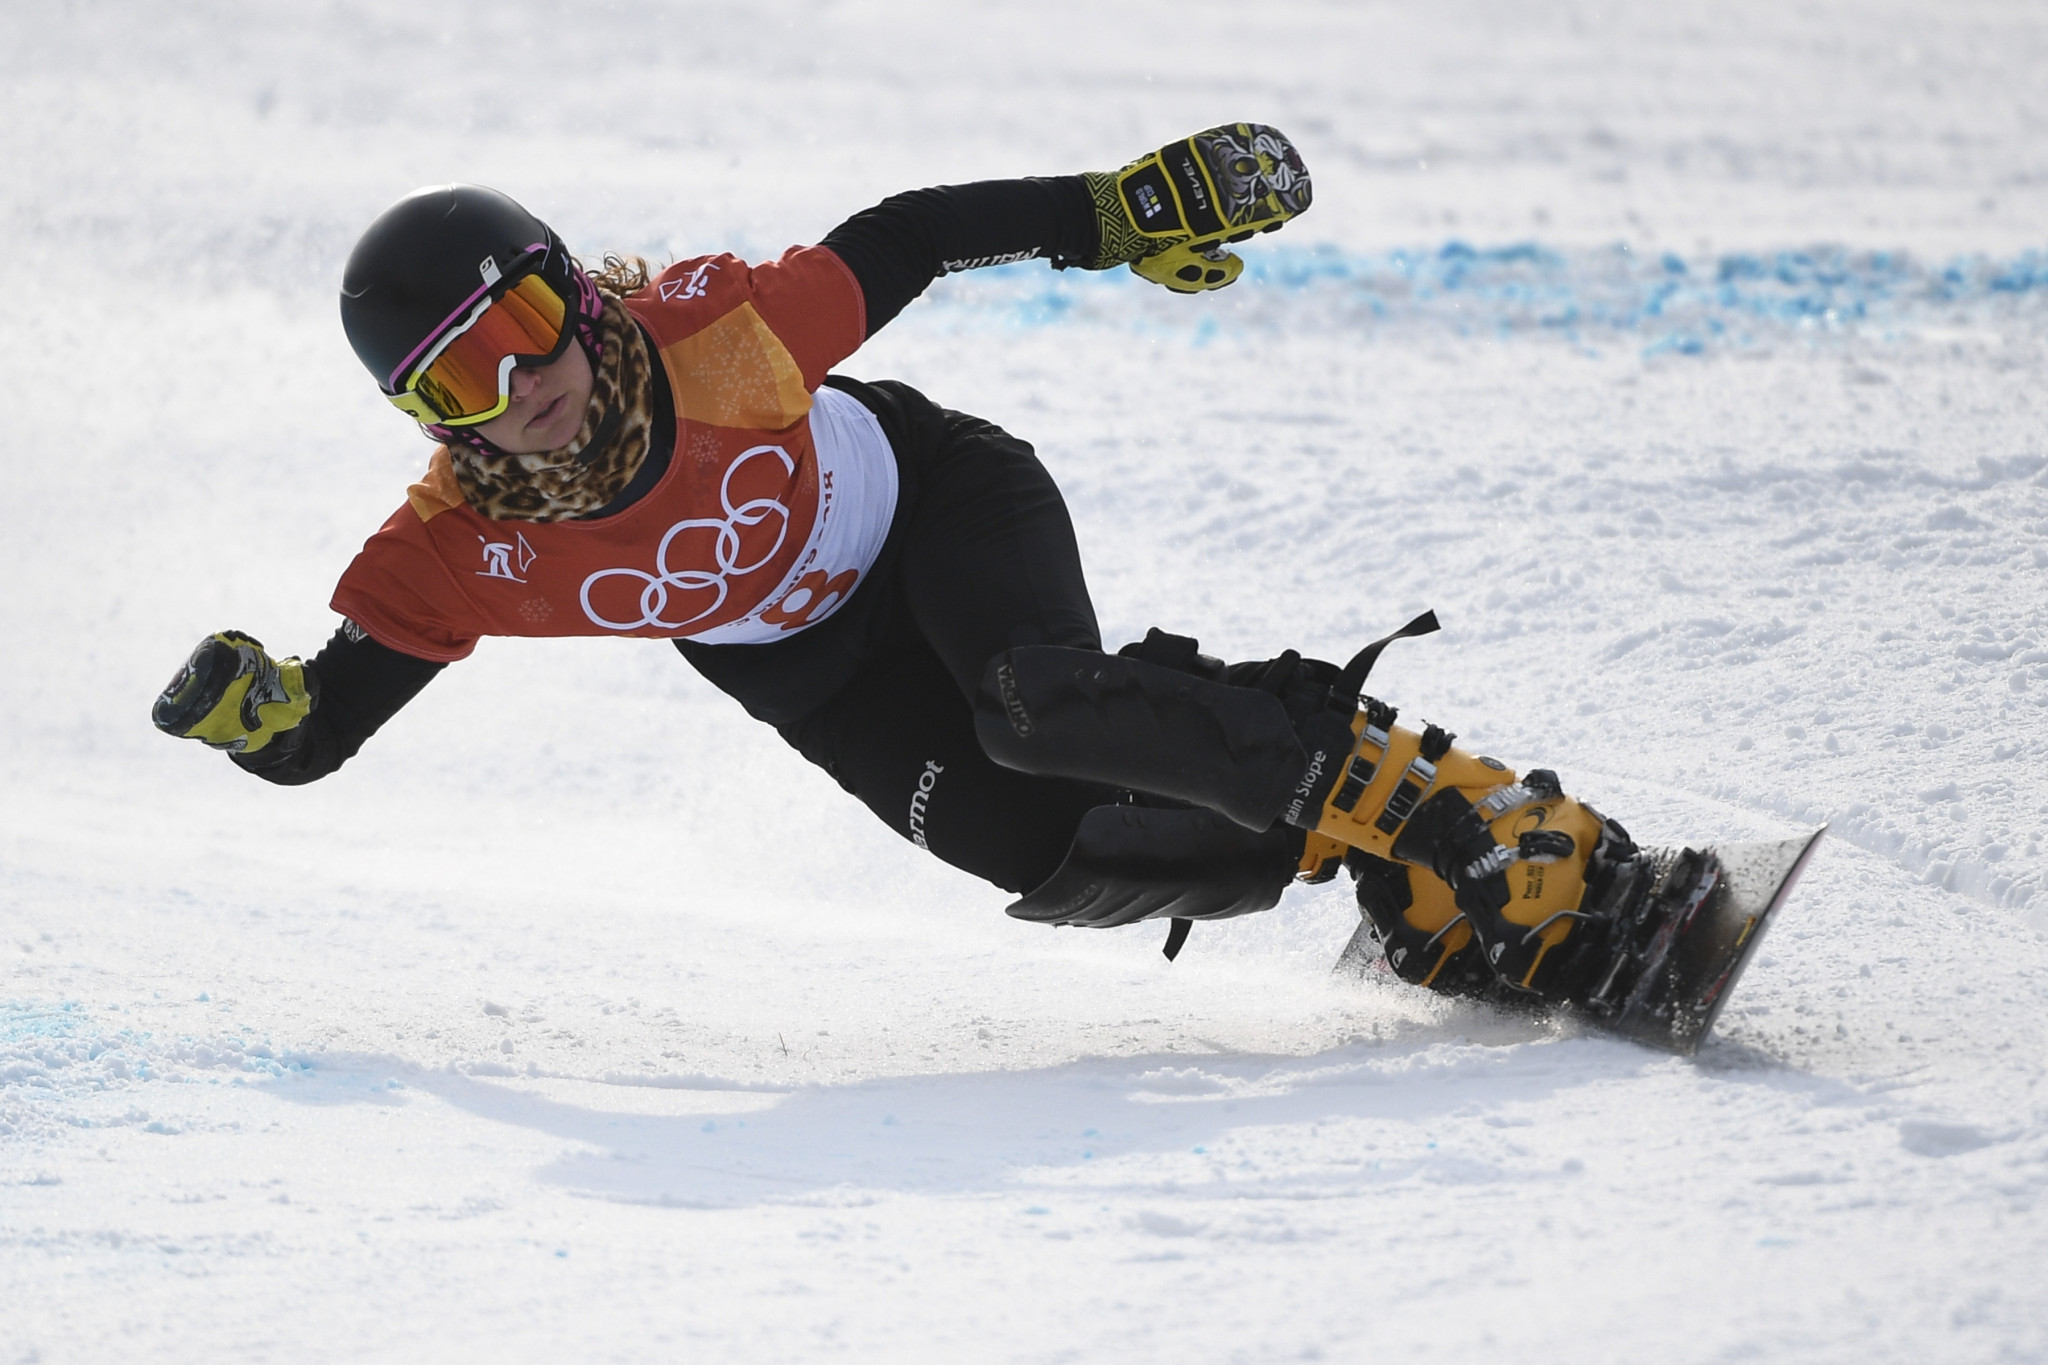 Hofmeister wins women's parallel slalom event at FIS Alpine Snowboard World Cup in Bad Gastein